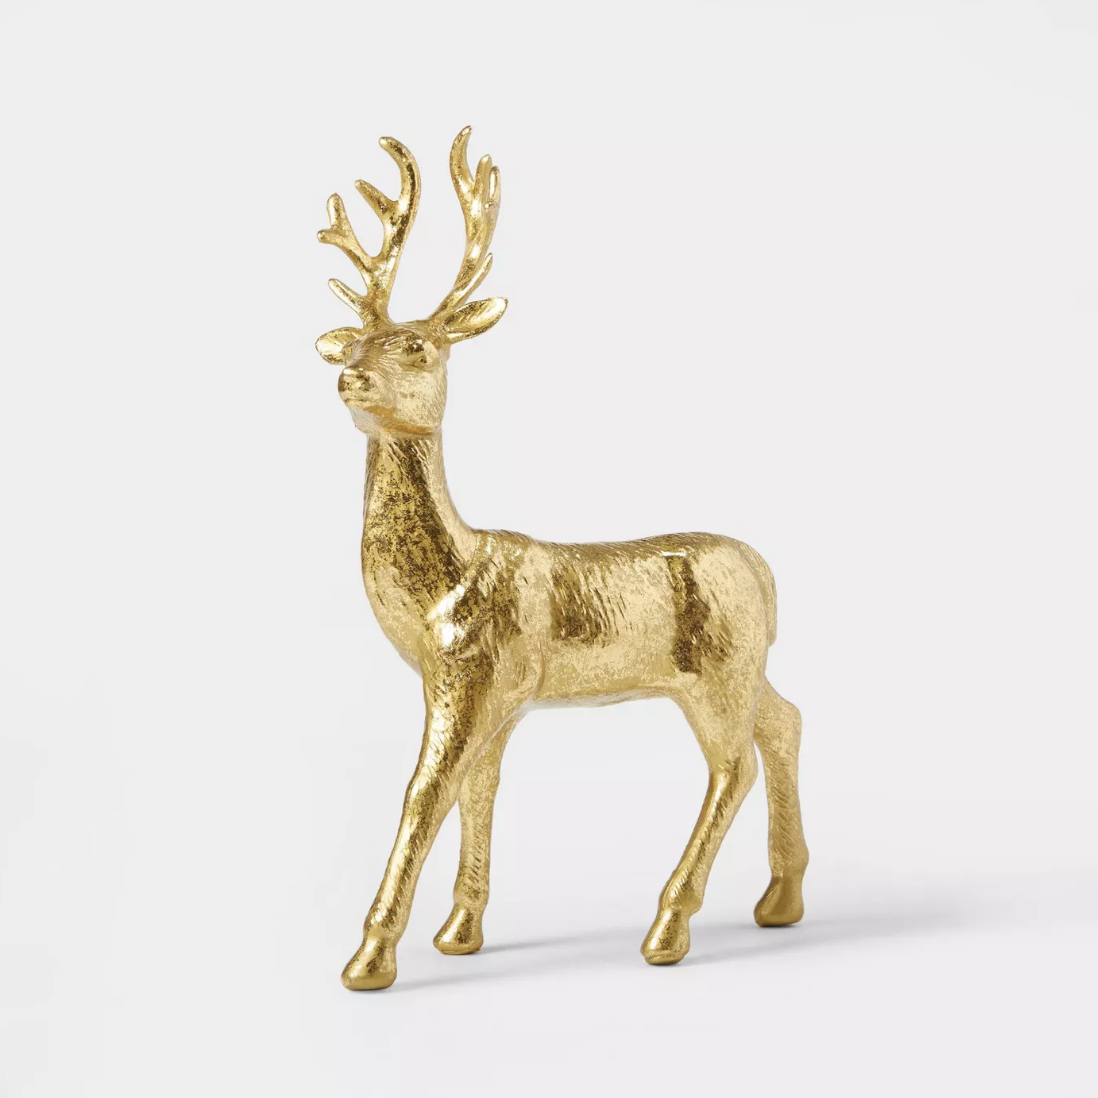 Metalized Deer Decorative Figurine Gold - $5